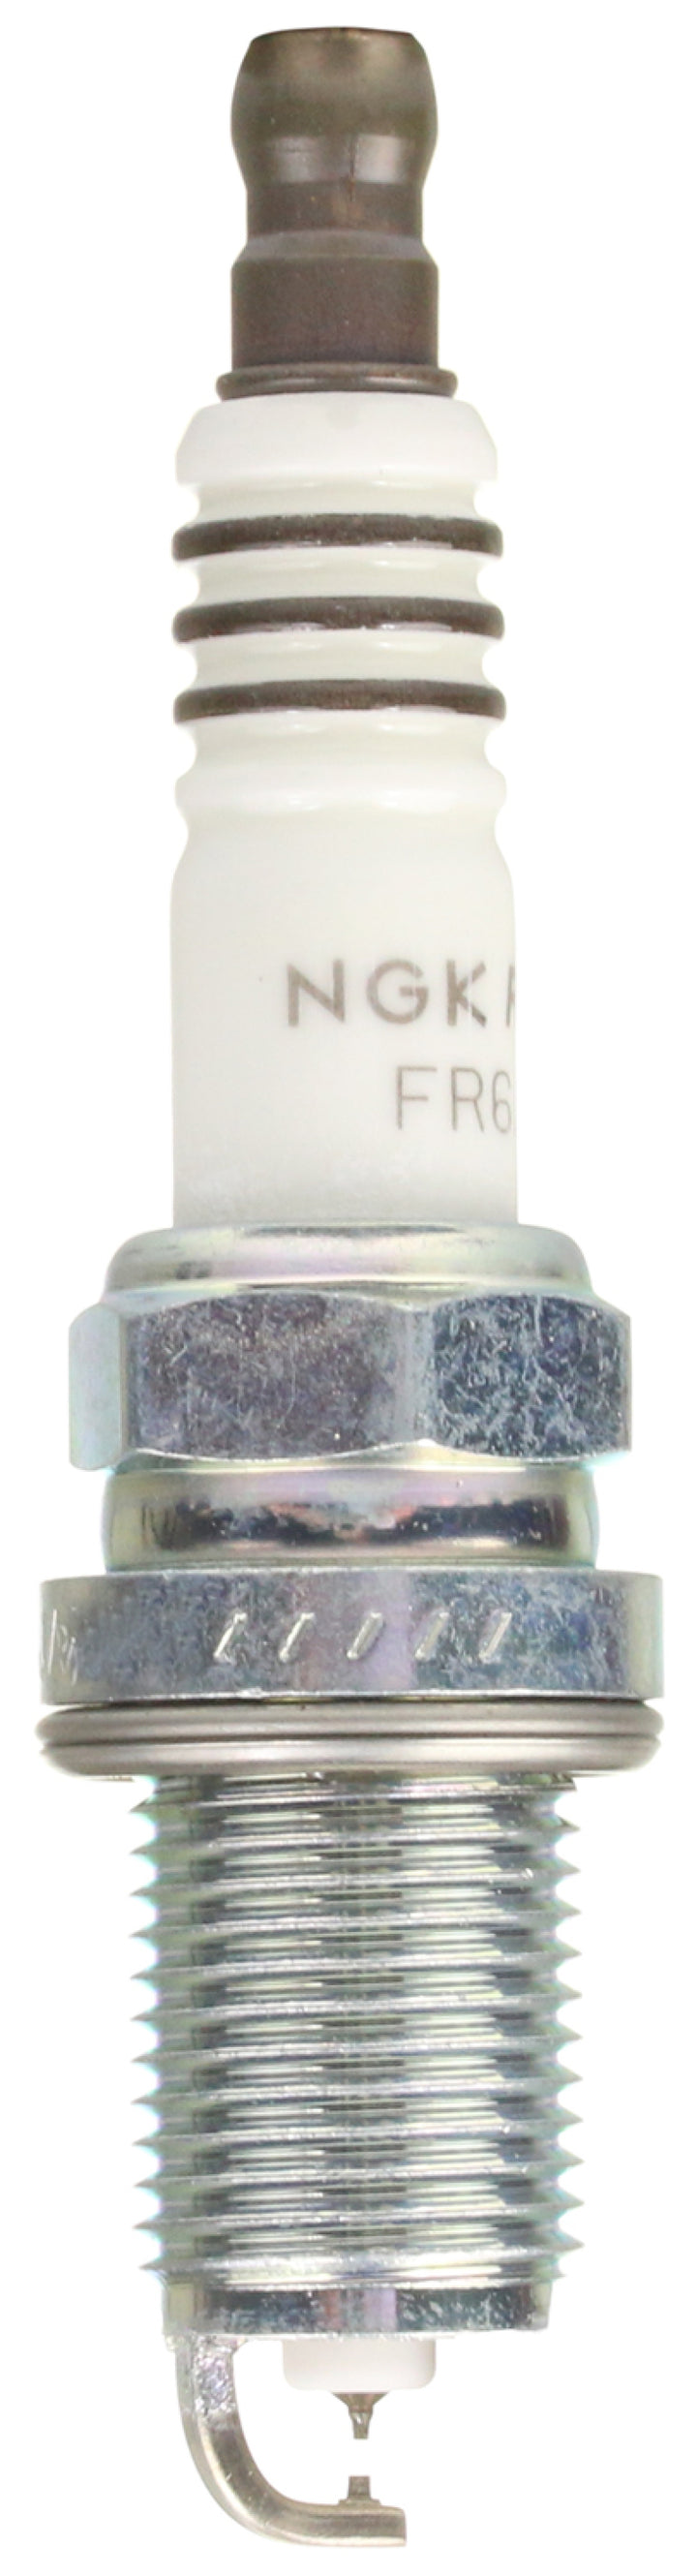 NGK Ruthenium HX Spark Plug Box of 4 (FR6AHX-S).